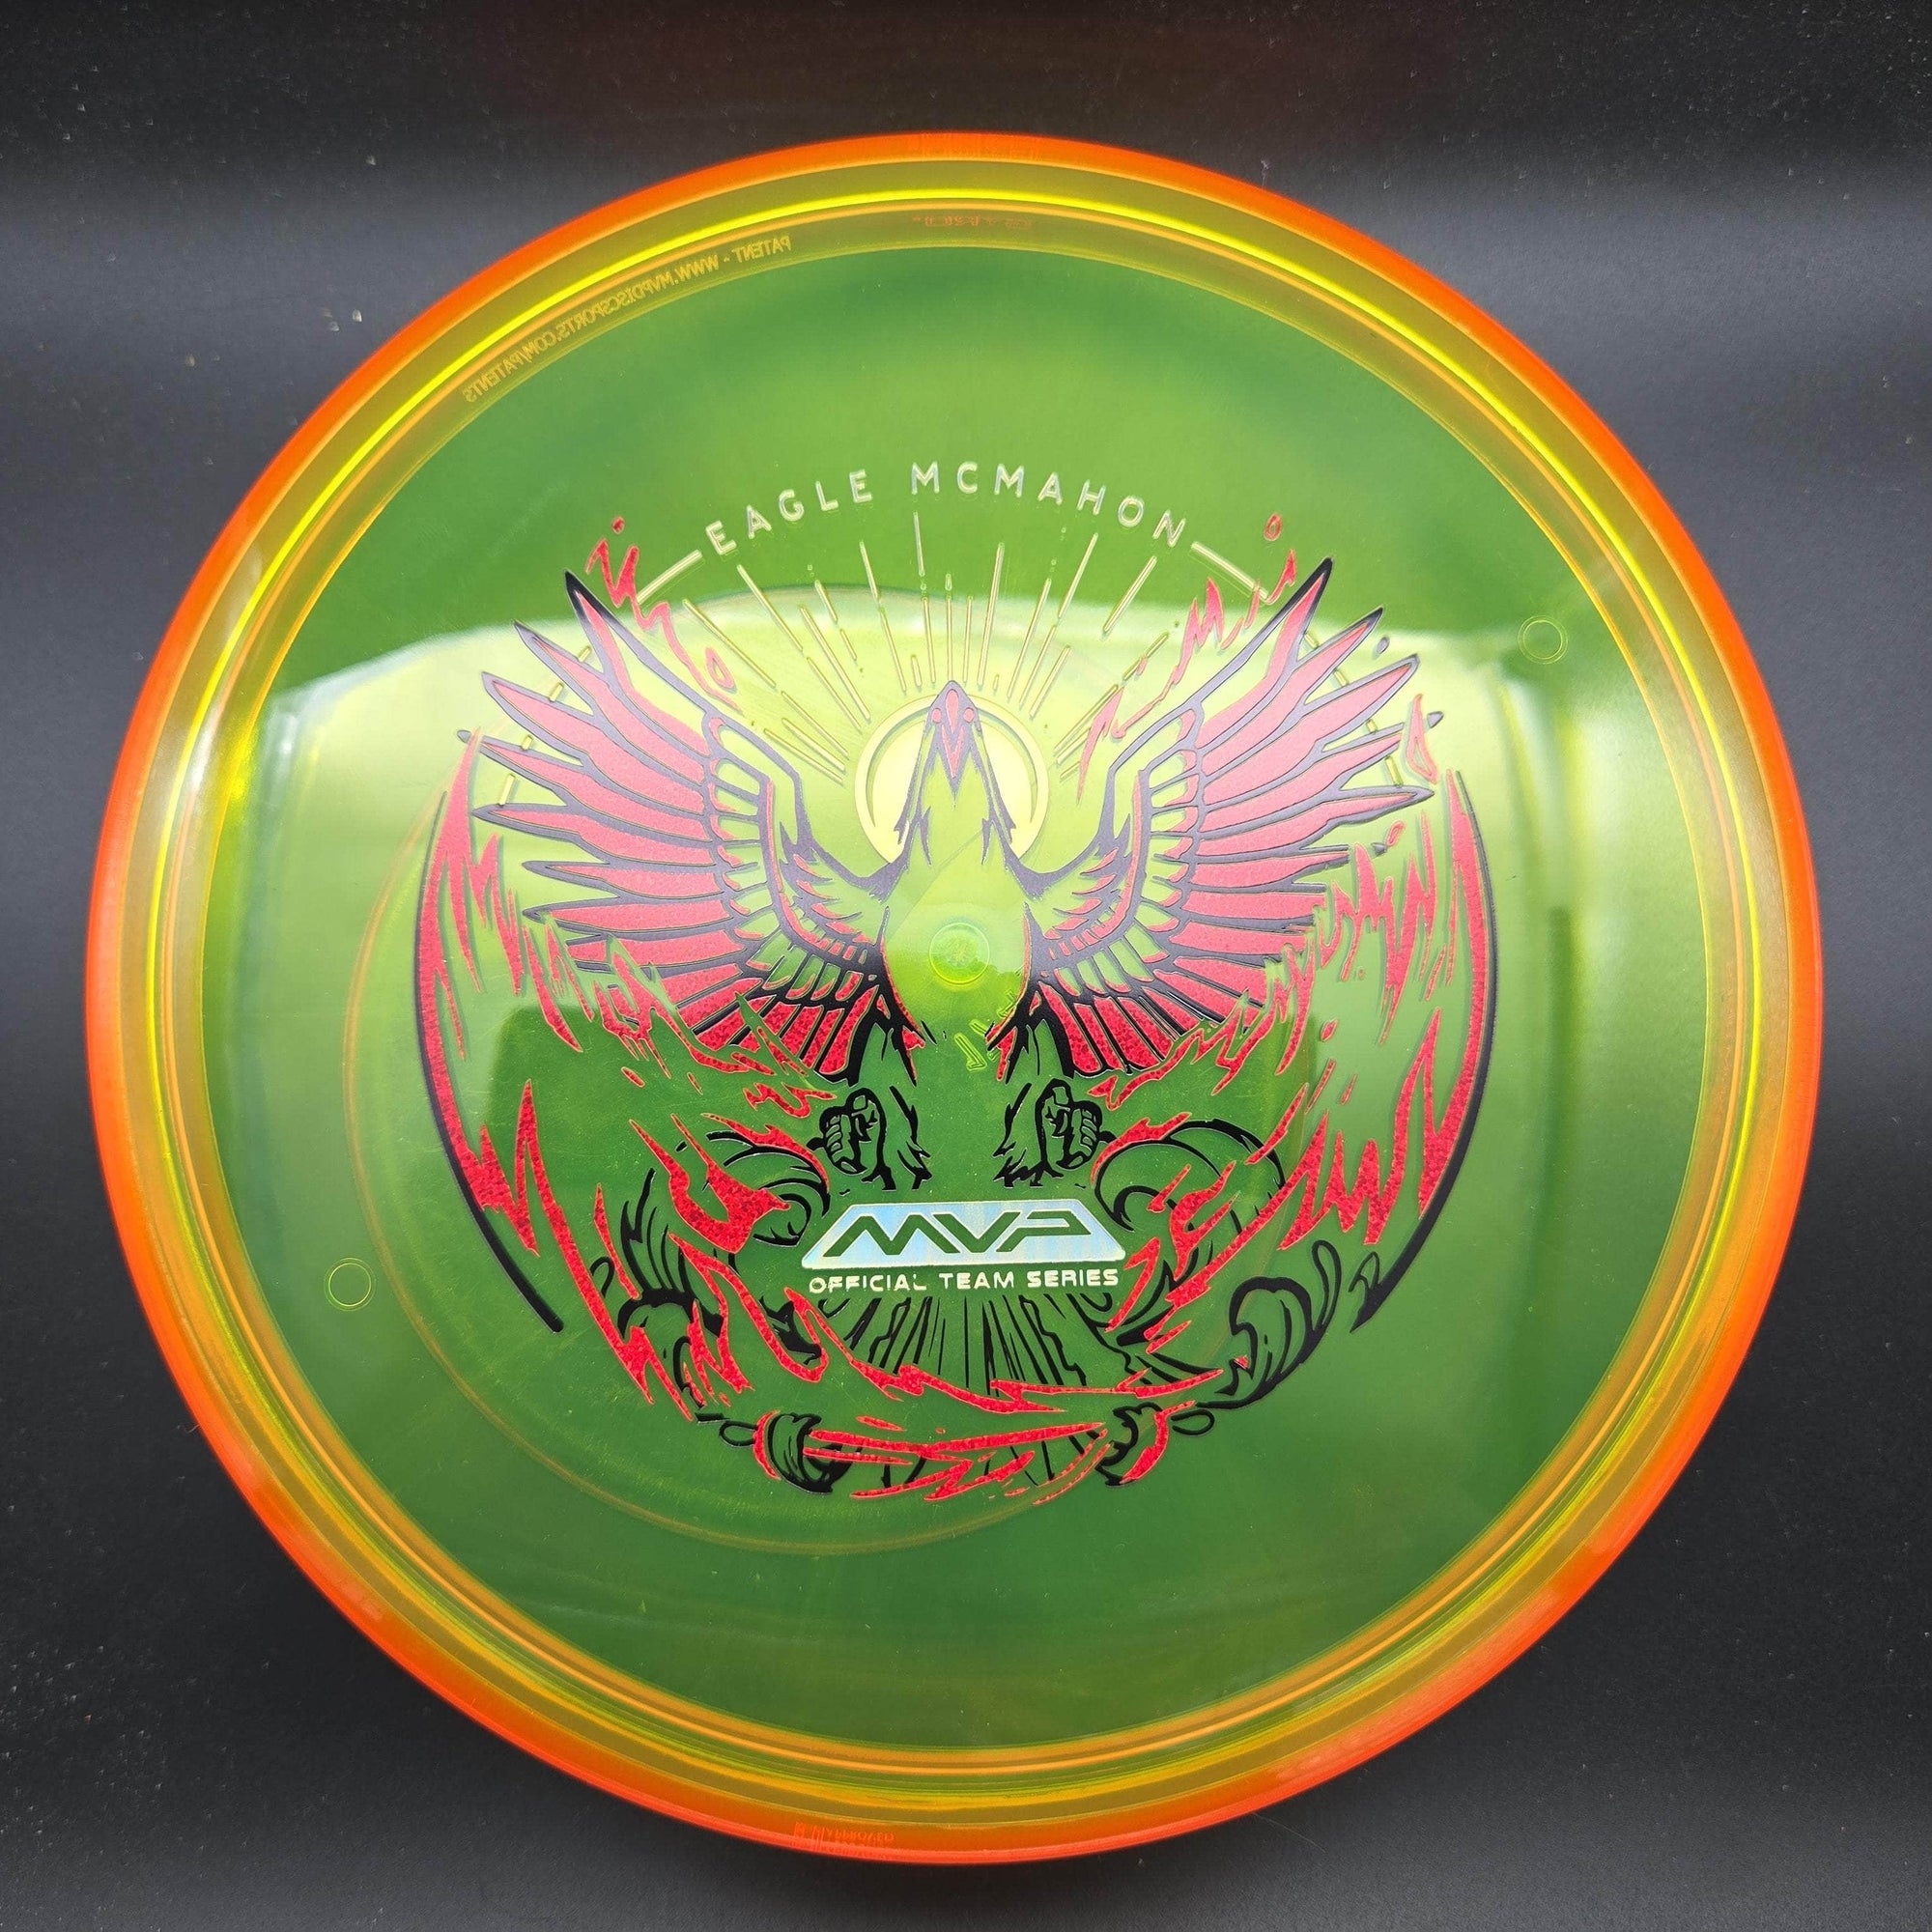 Axiom Putter Orange Rim Yellow Plate 174g Envy, Prism Proton, Eagle McMahon Special Edition